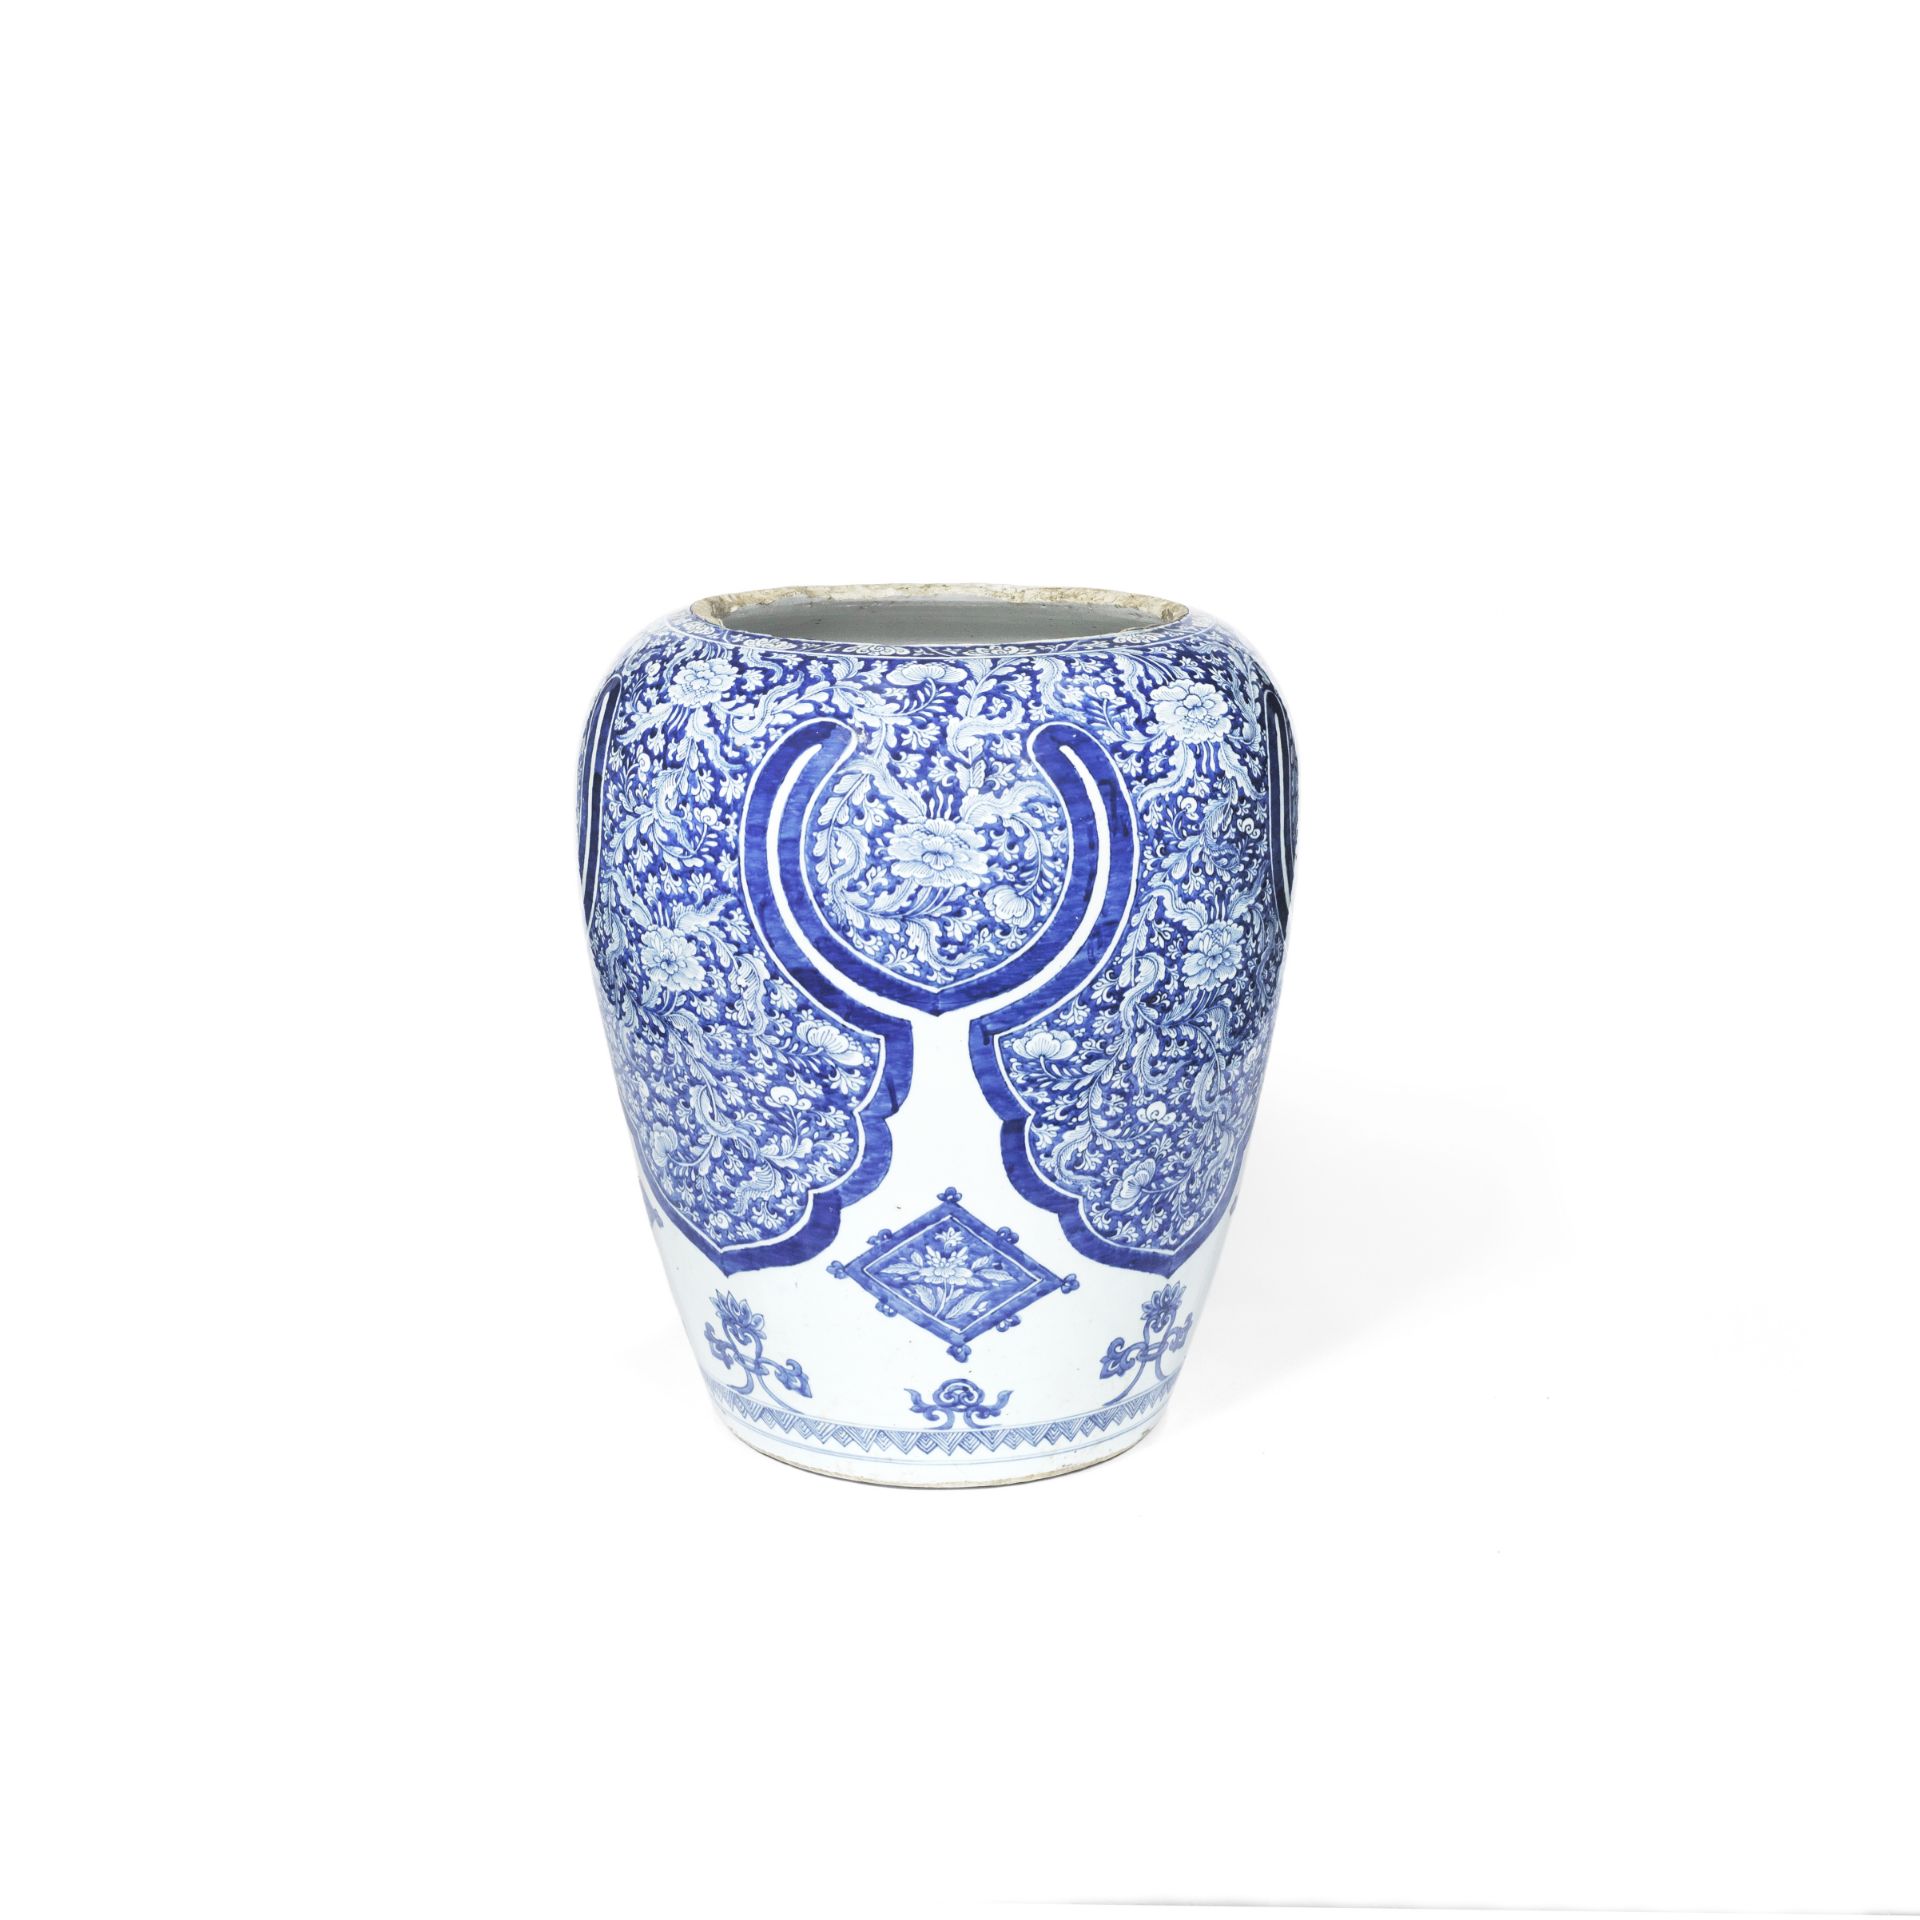 A LARGE BLUE AND WHITE JAR Kangxi